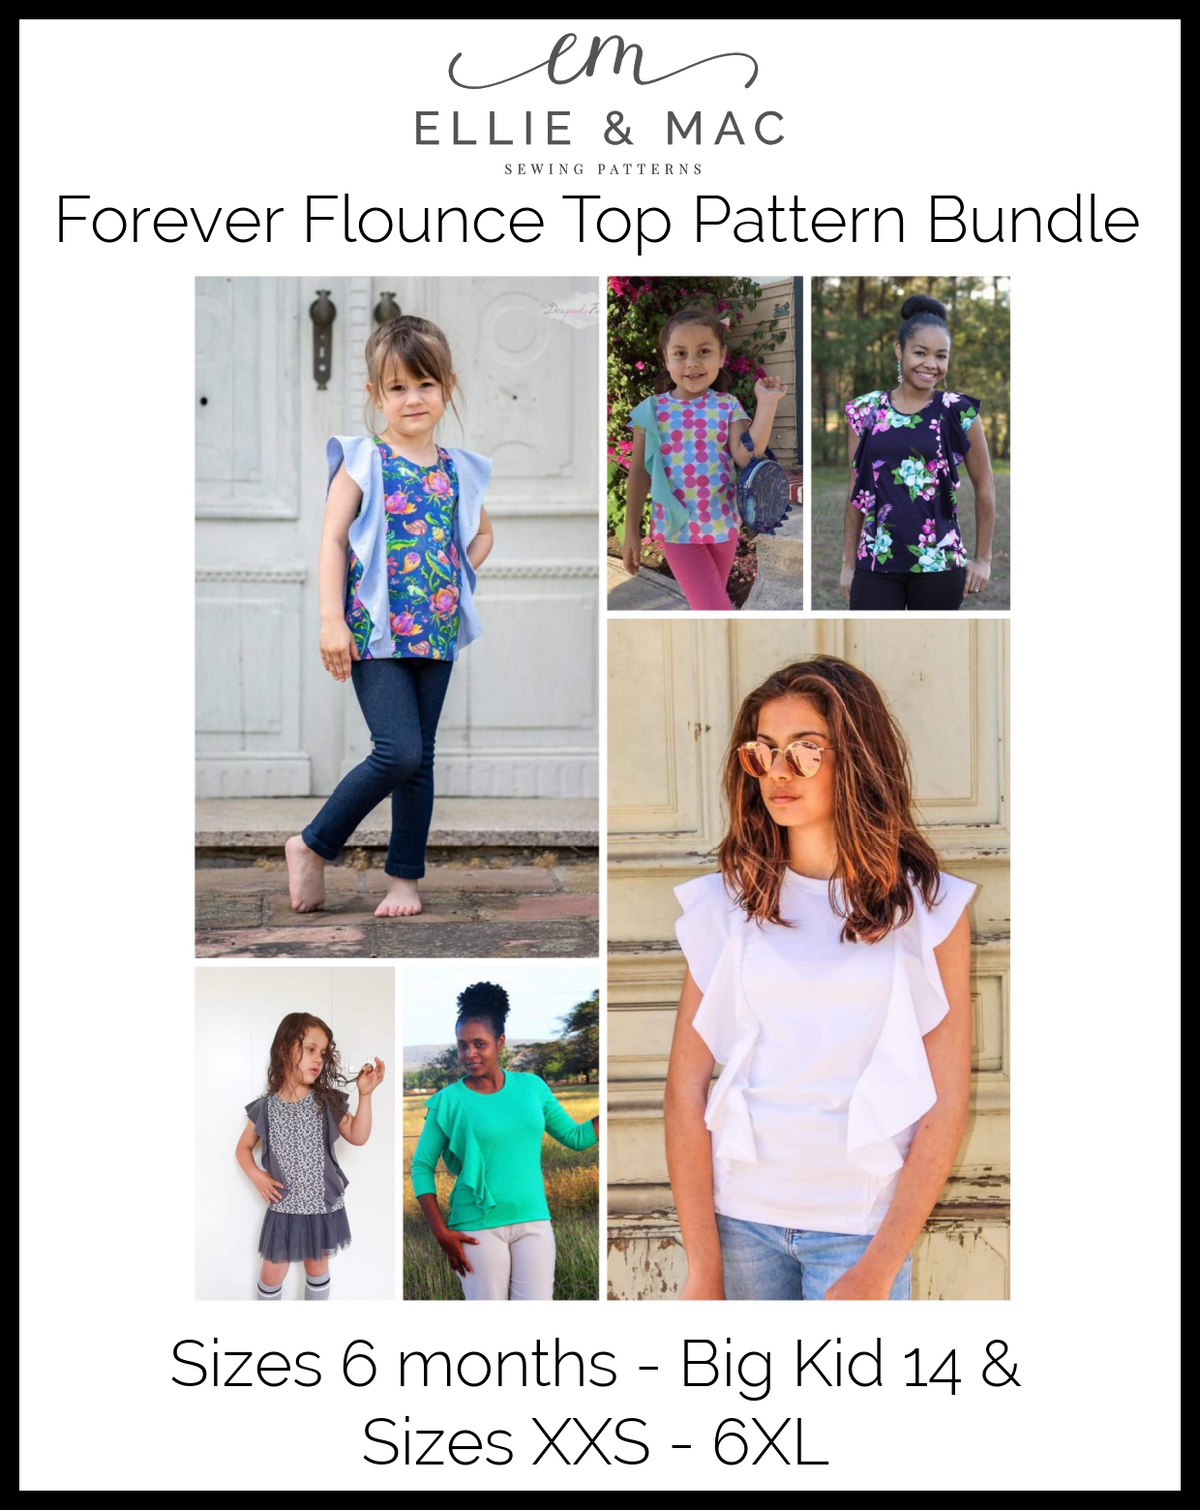 Forever Flounce Top Pattern Bundle